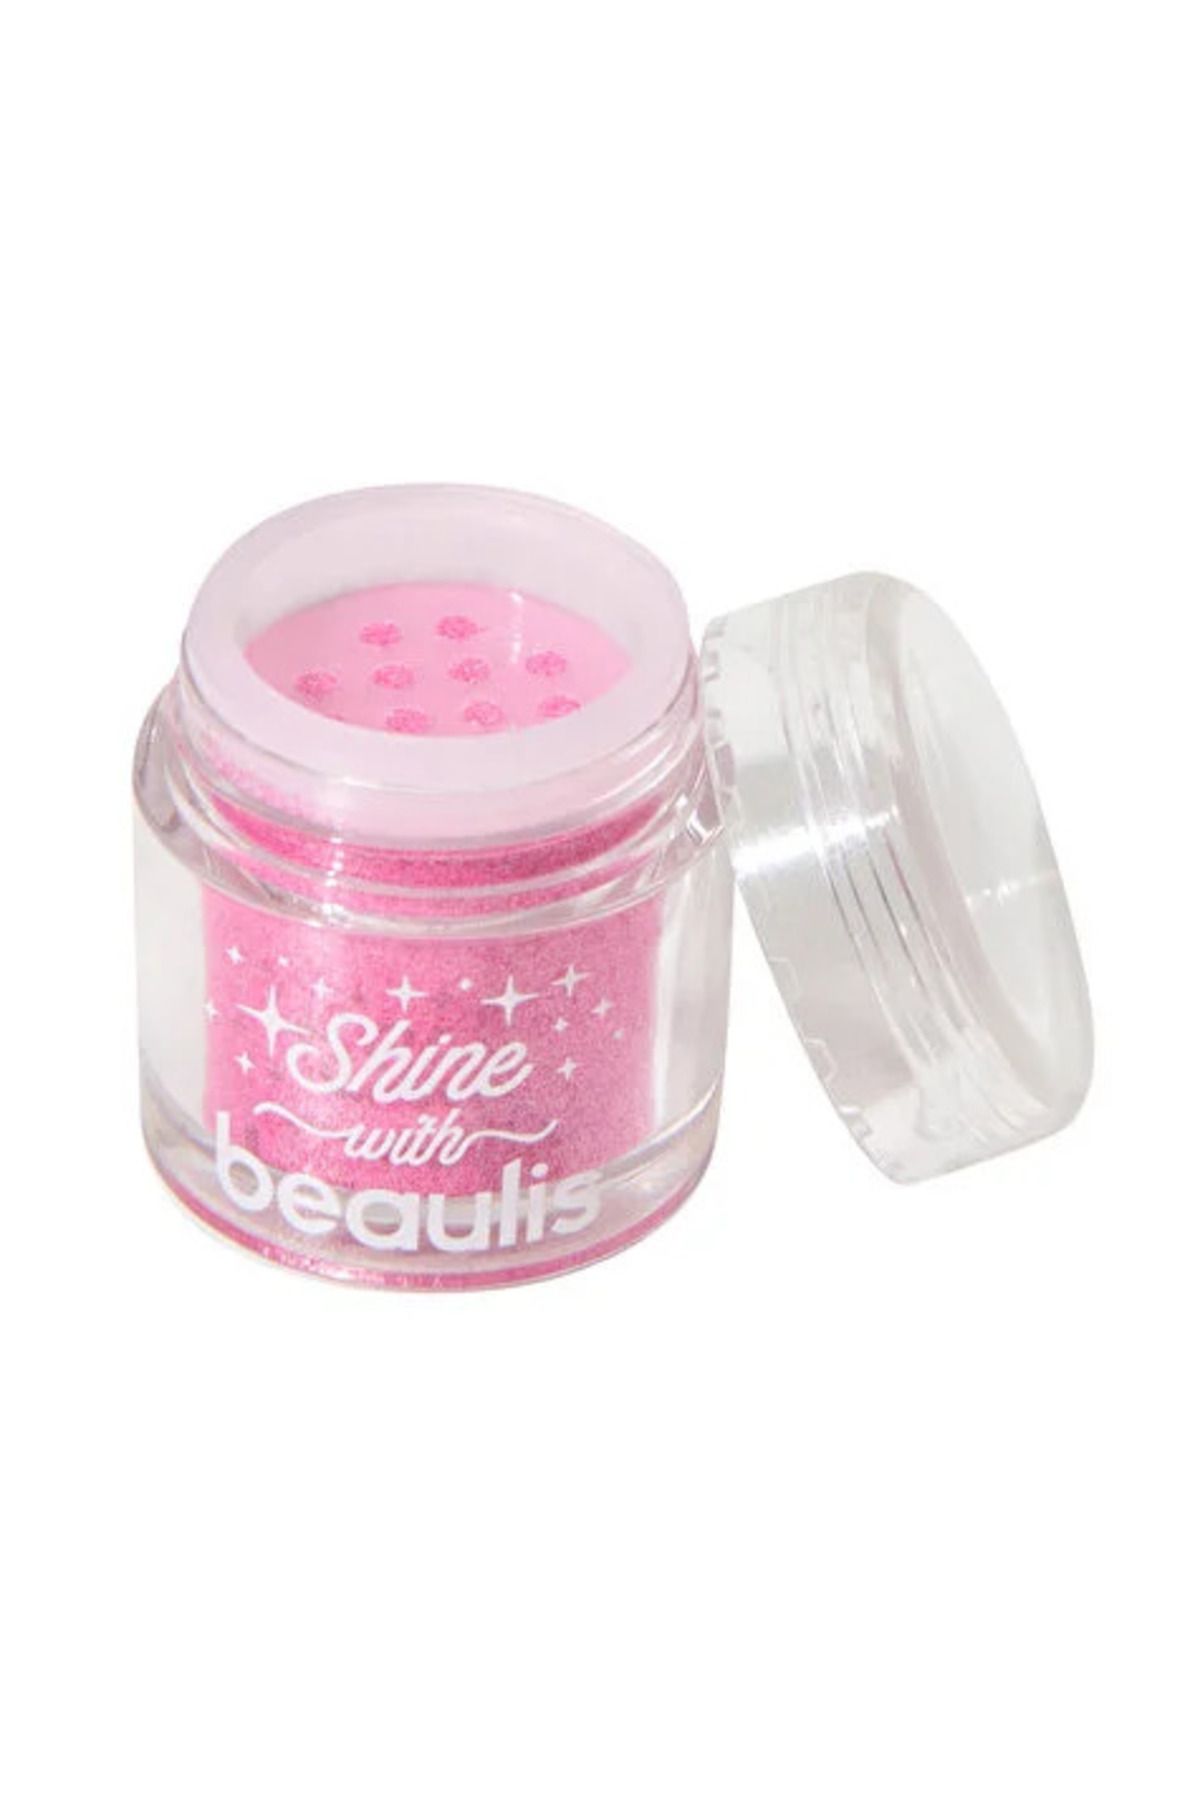 beaulis Shine with Toz Glitter 619 Pink Sparkling